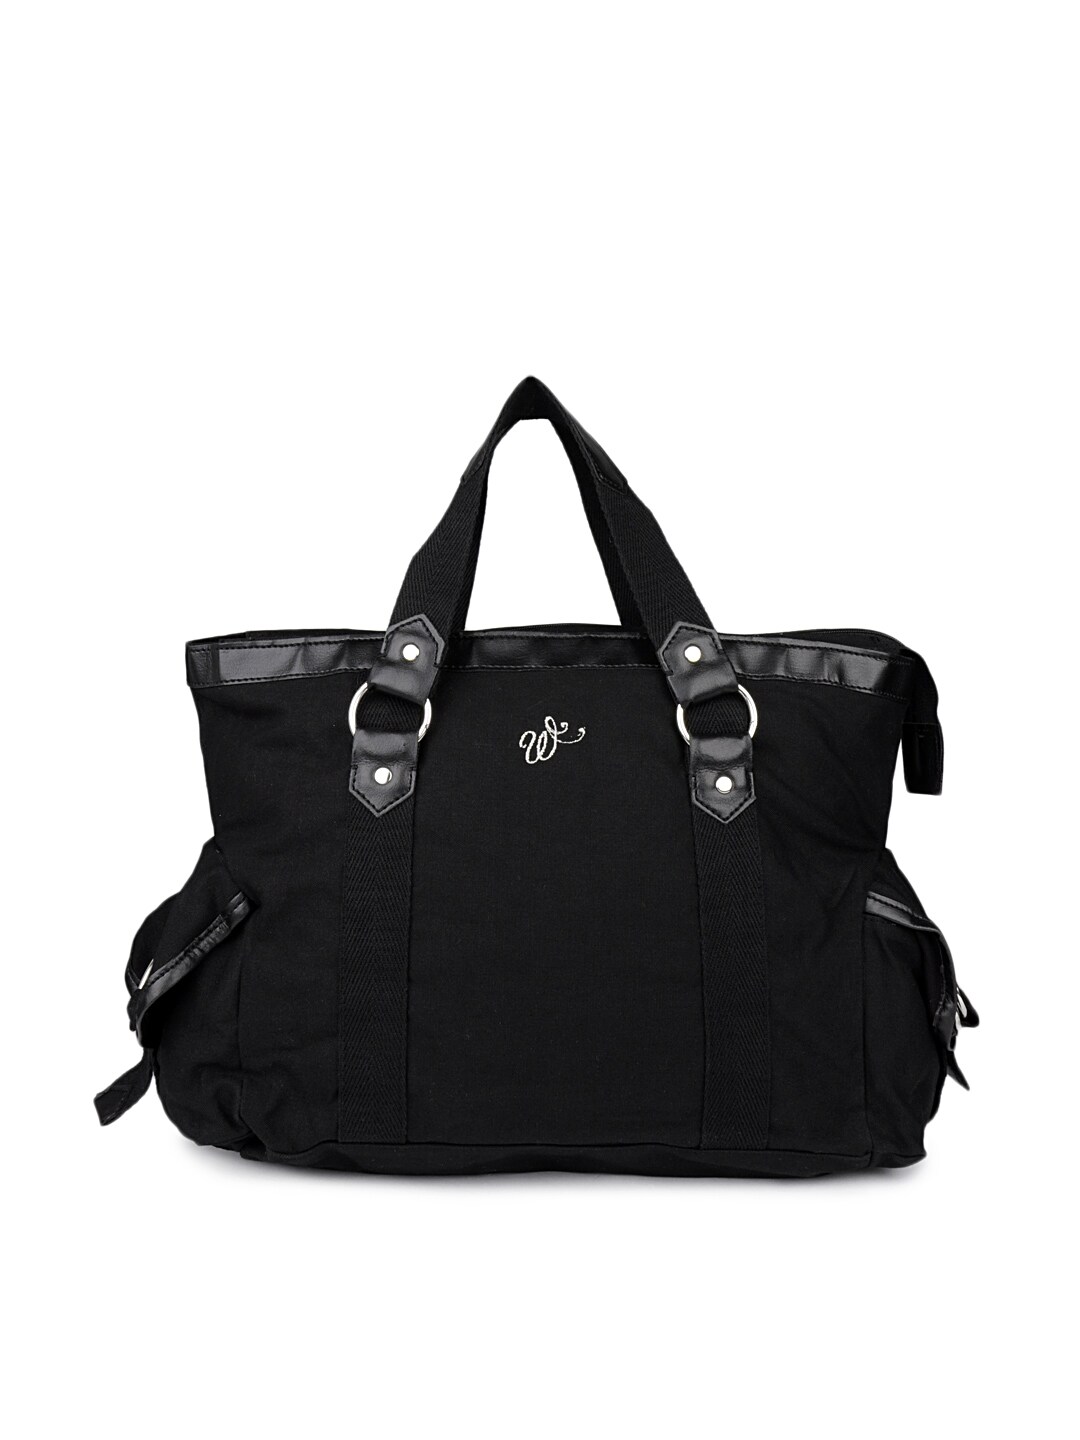 Wrangler Women Black Canvas Handbag